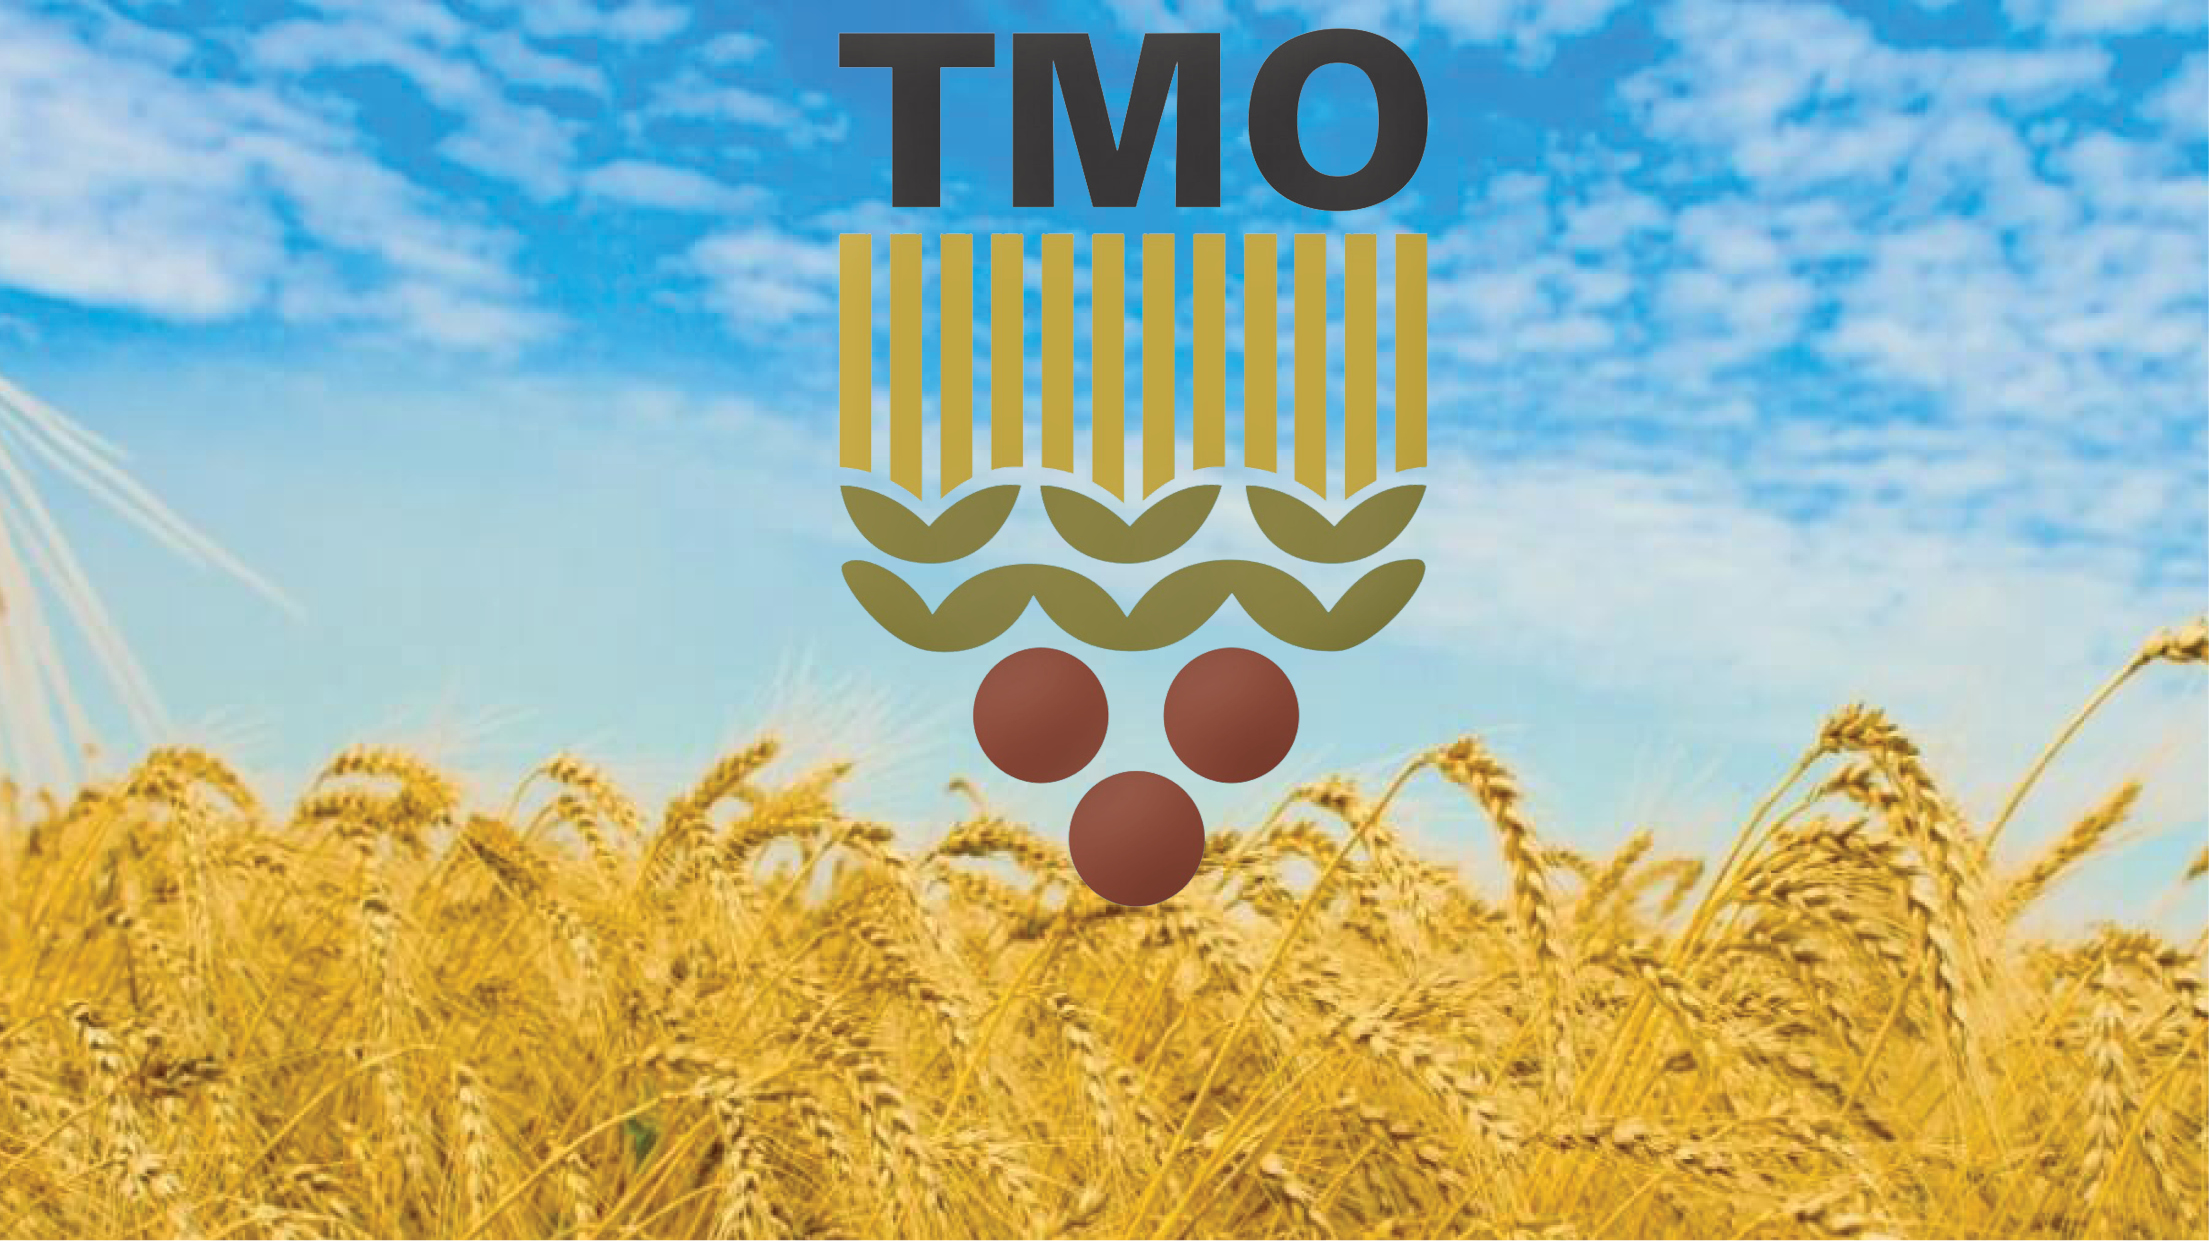 T me tmo up. TMO. TMO logo. TMO Superevents. MITIS TMO.